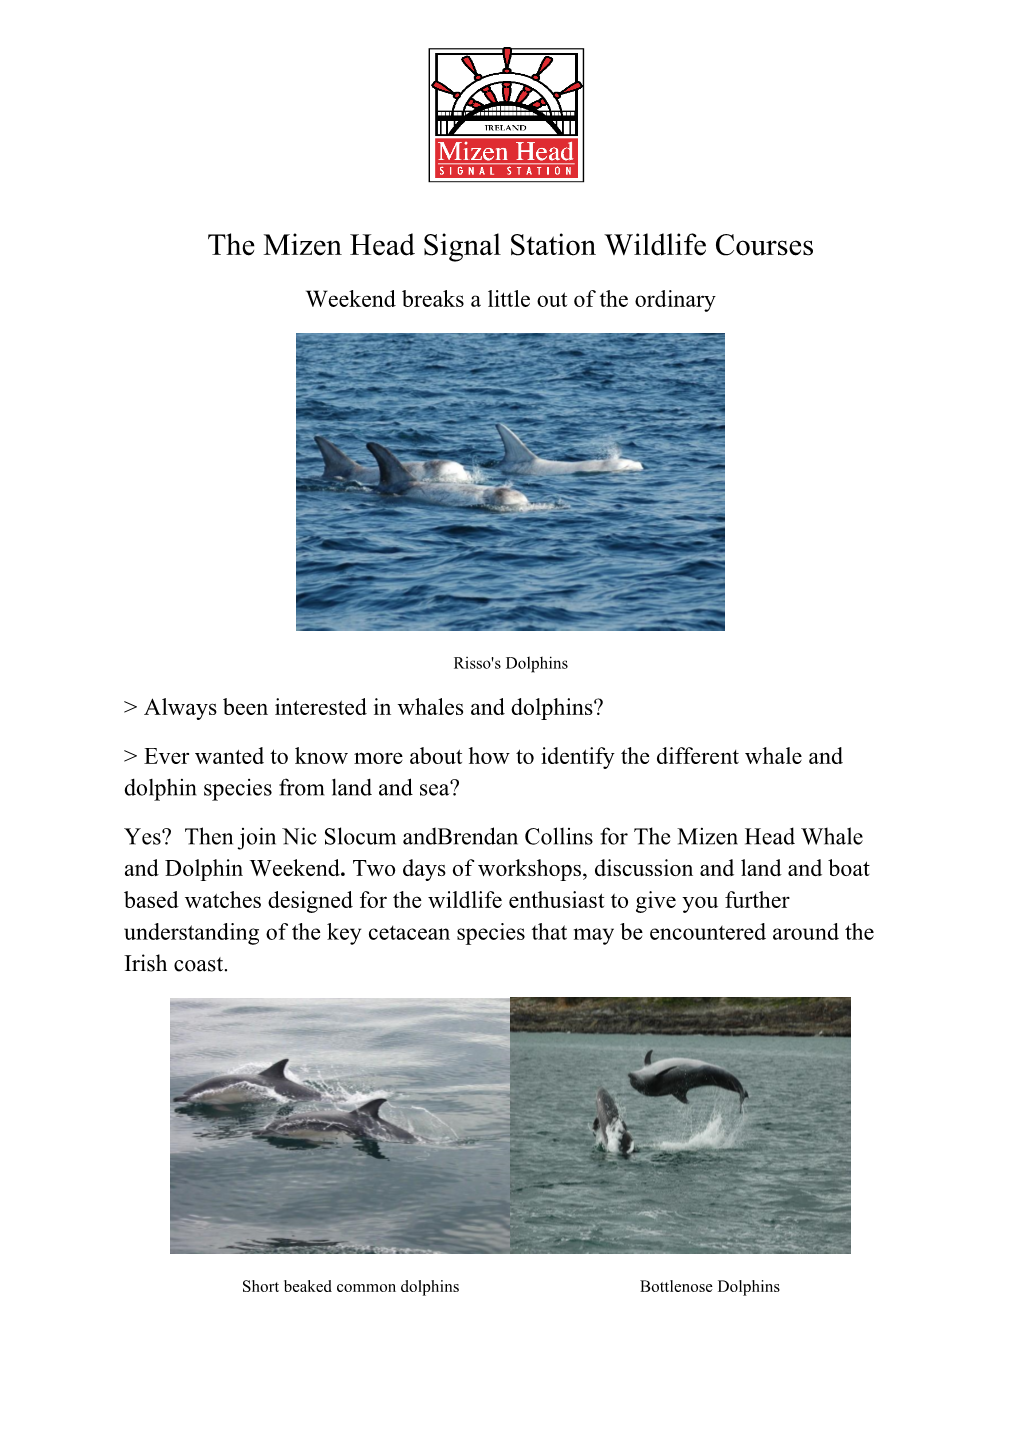 The Mizen Head Signal Station Wildlife Courses